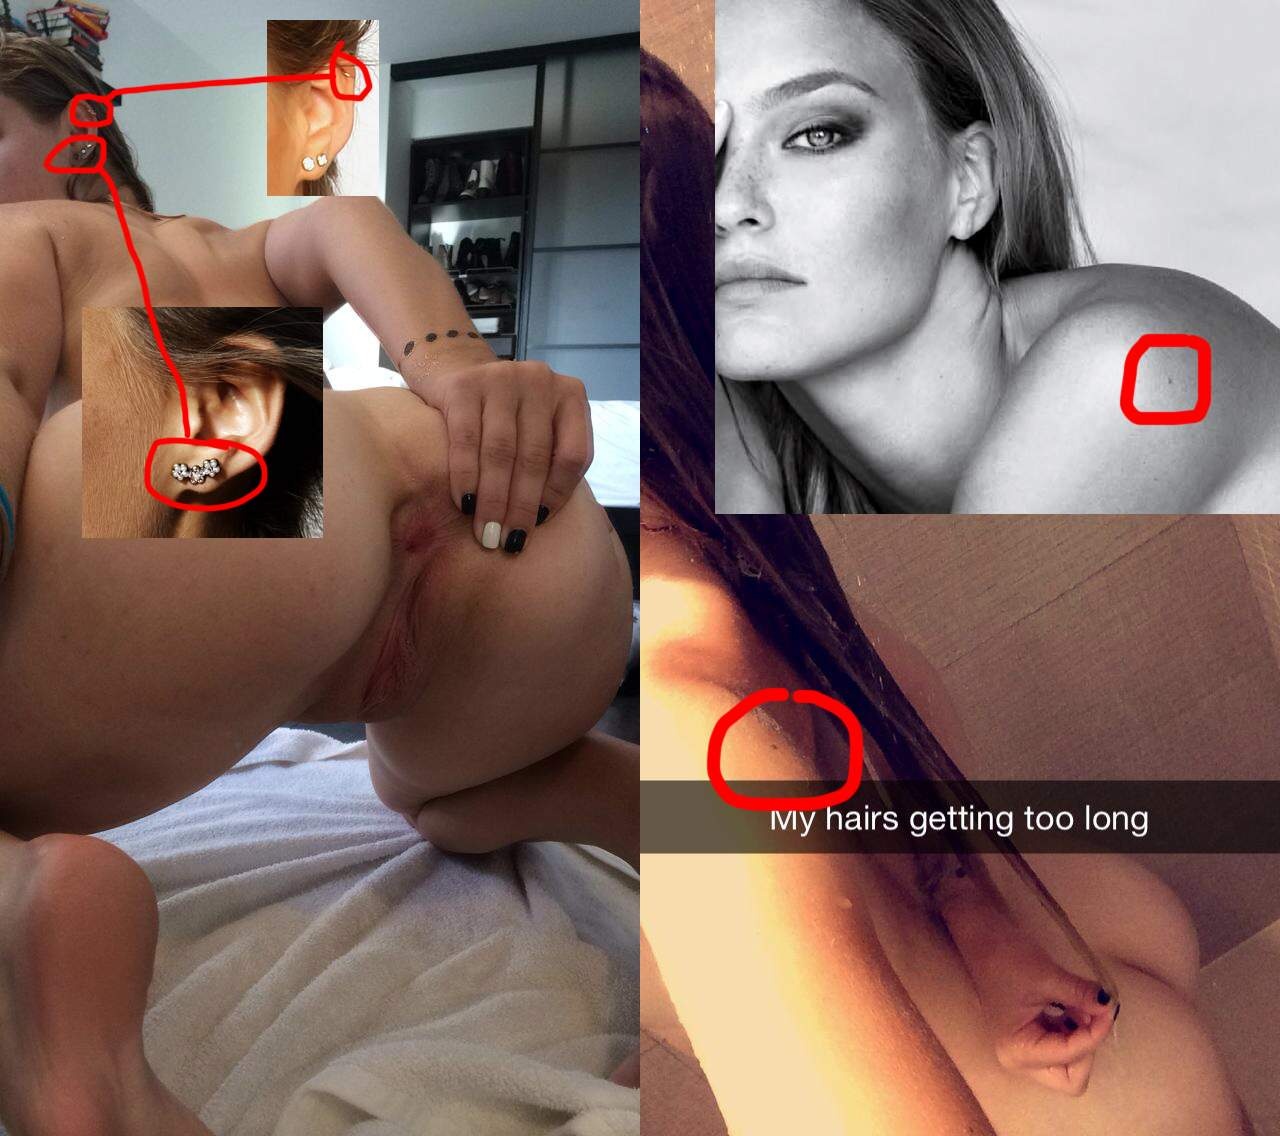 Elizabeth Olsen Naked Photos Celebrity Nude Leaked Pictures 3